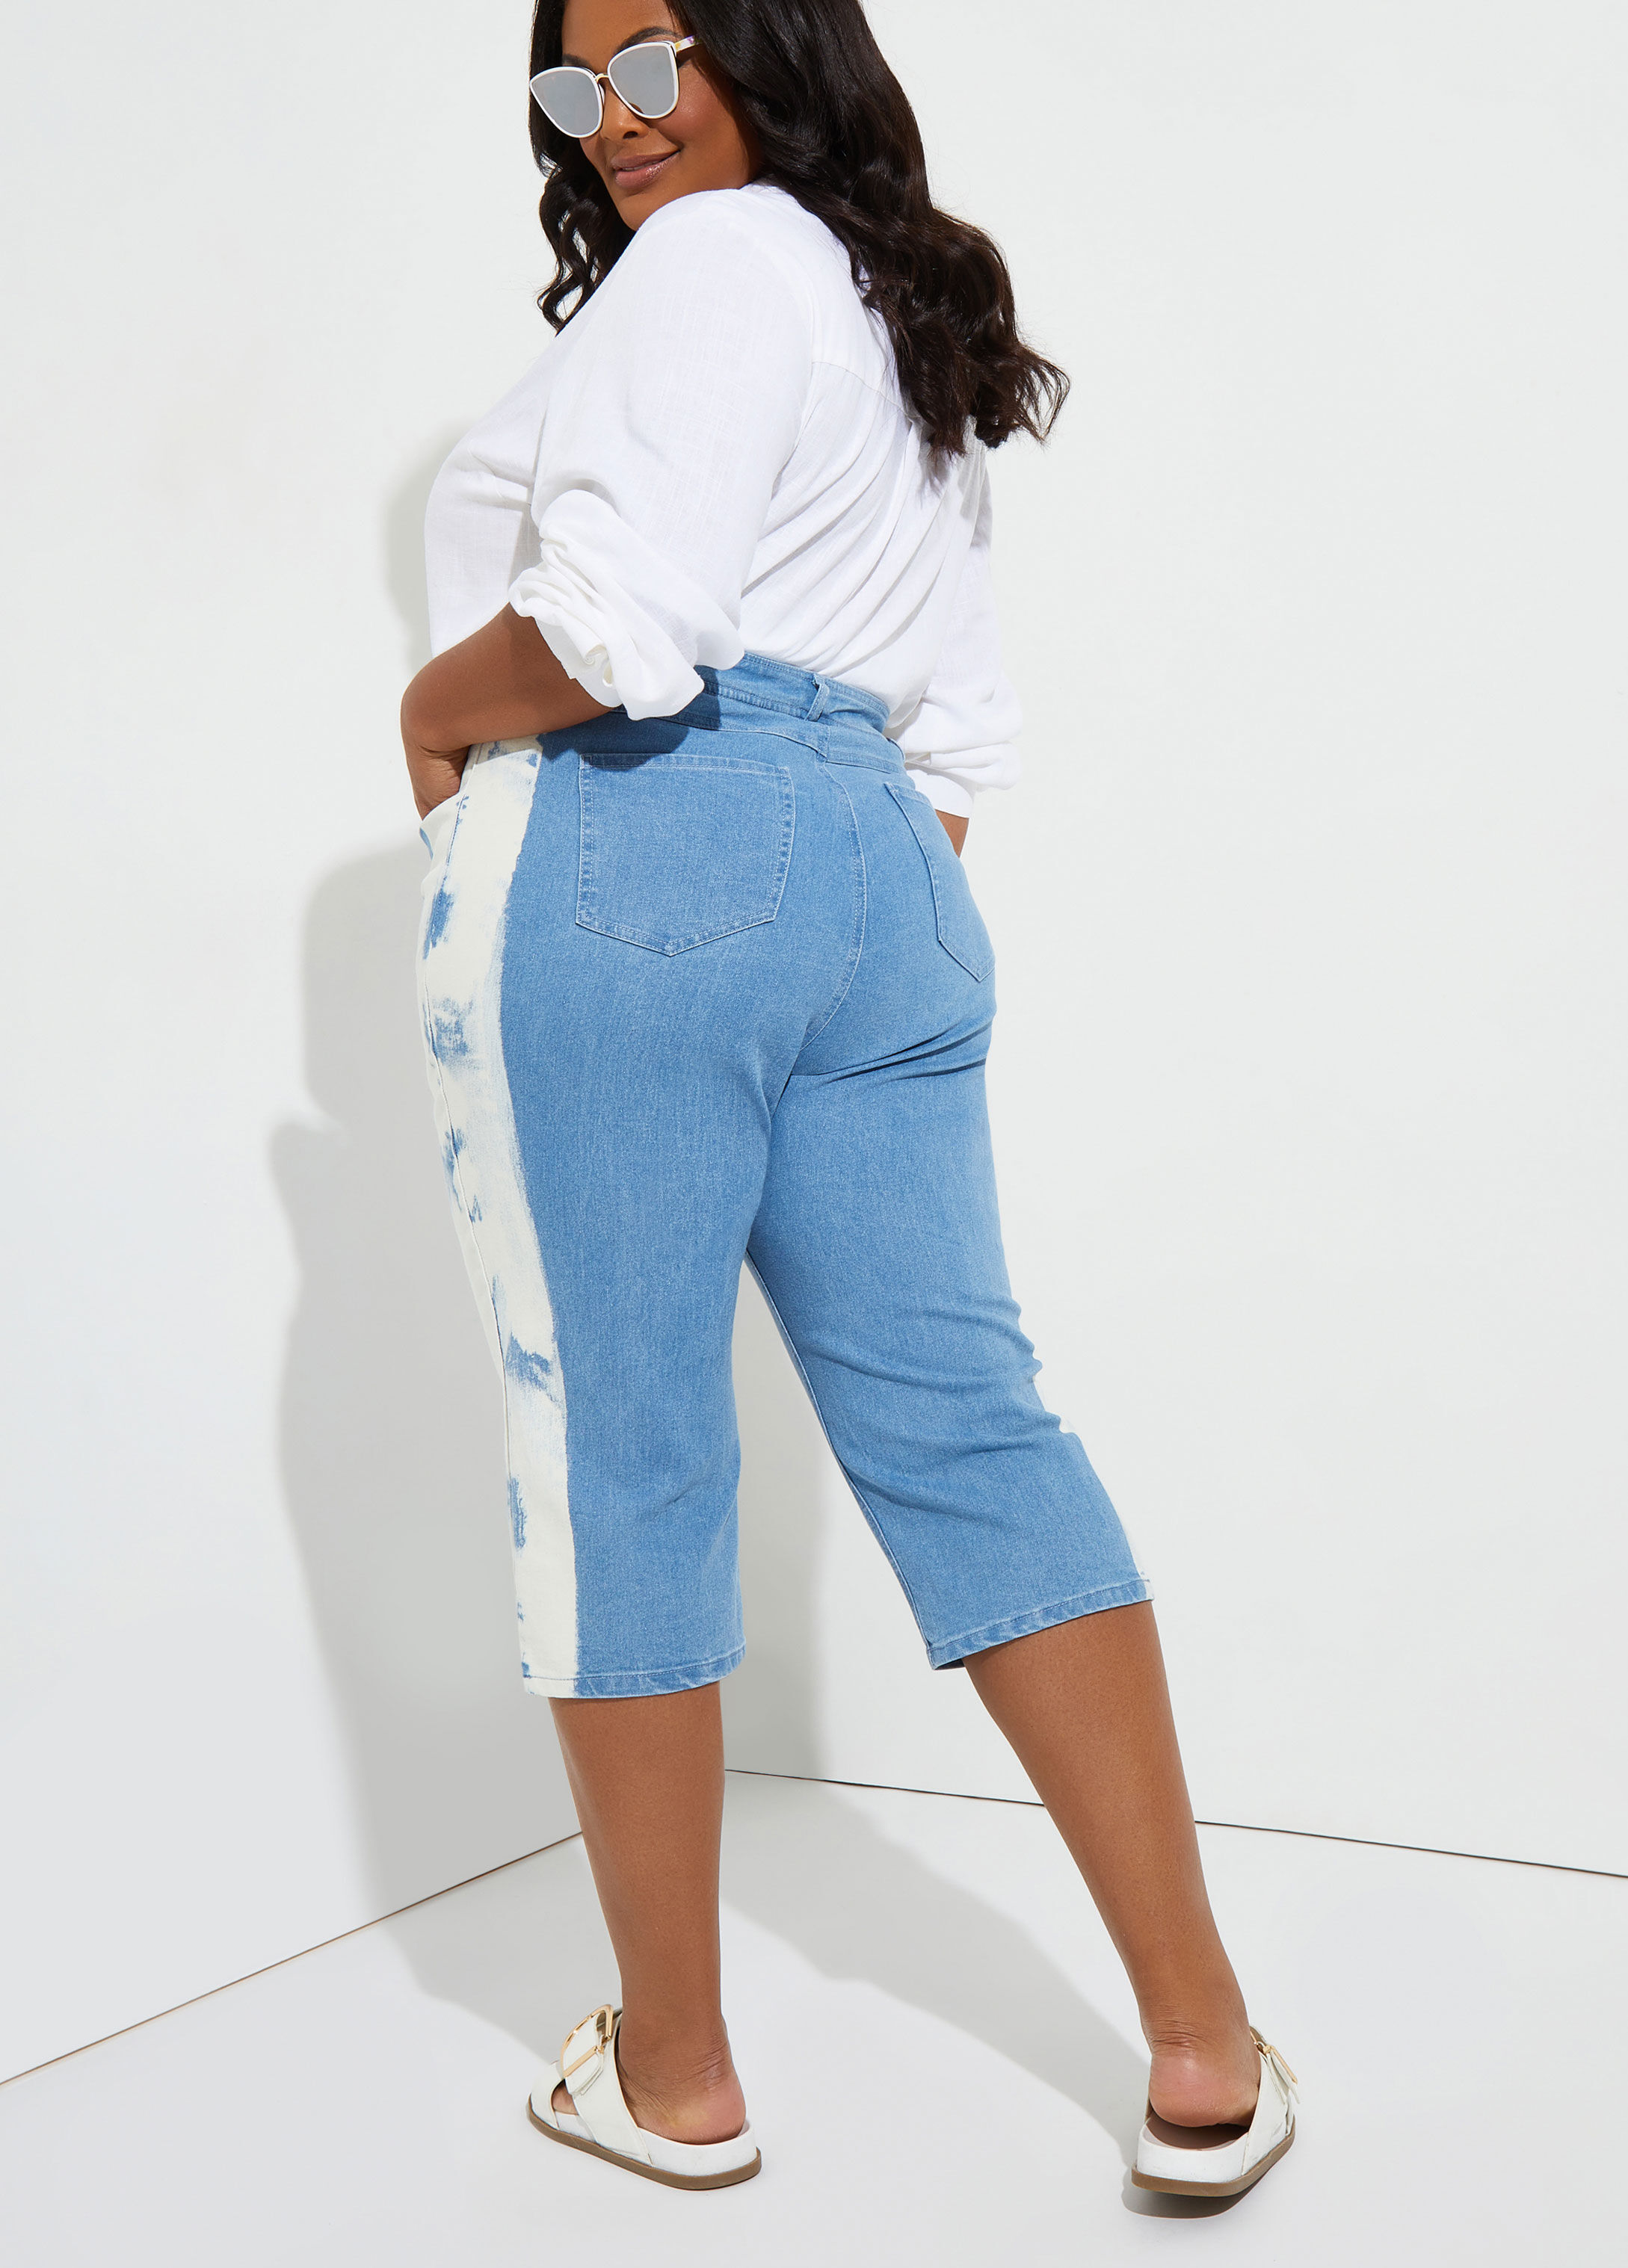 Plus Size View All Jeans, Sizes 10 - 36 | Ashley Stewart